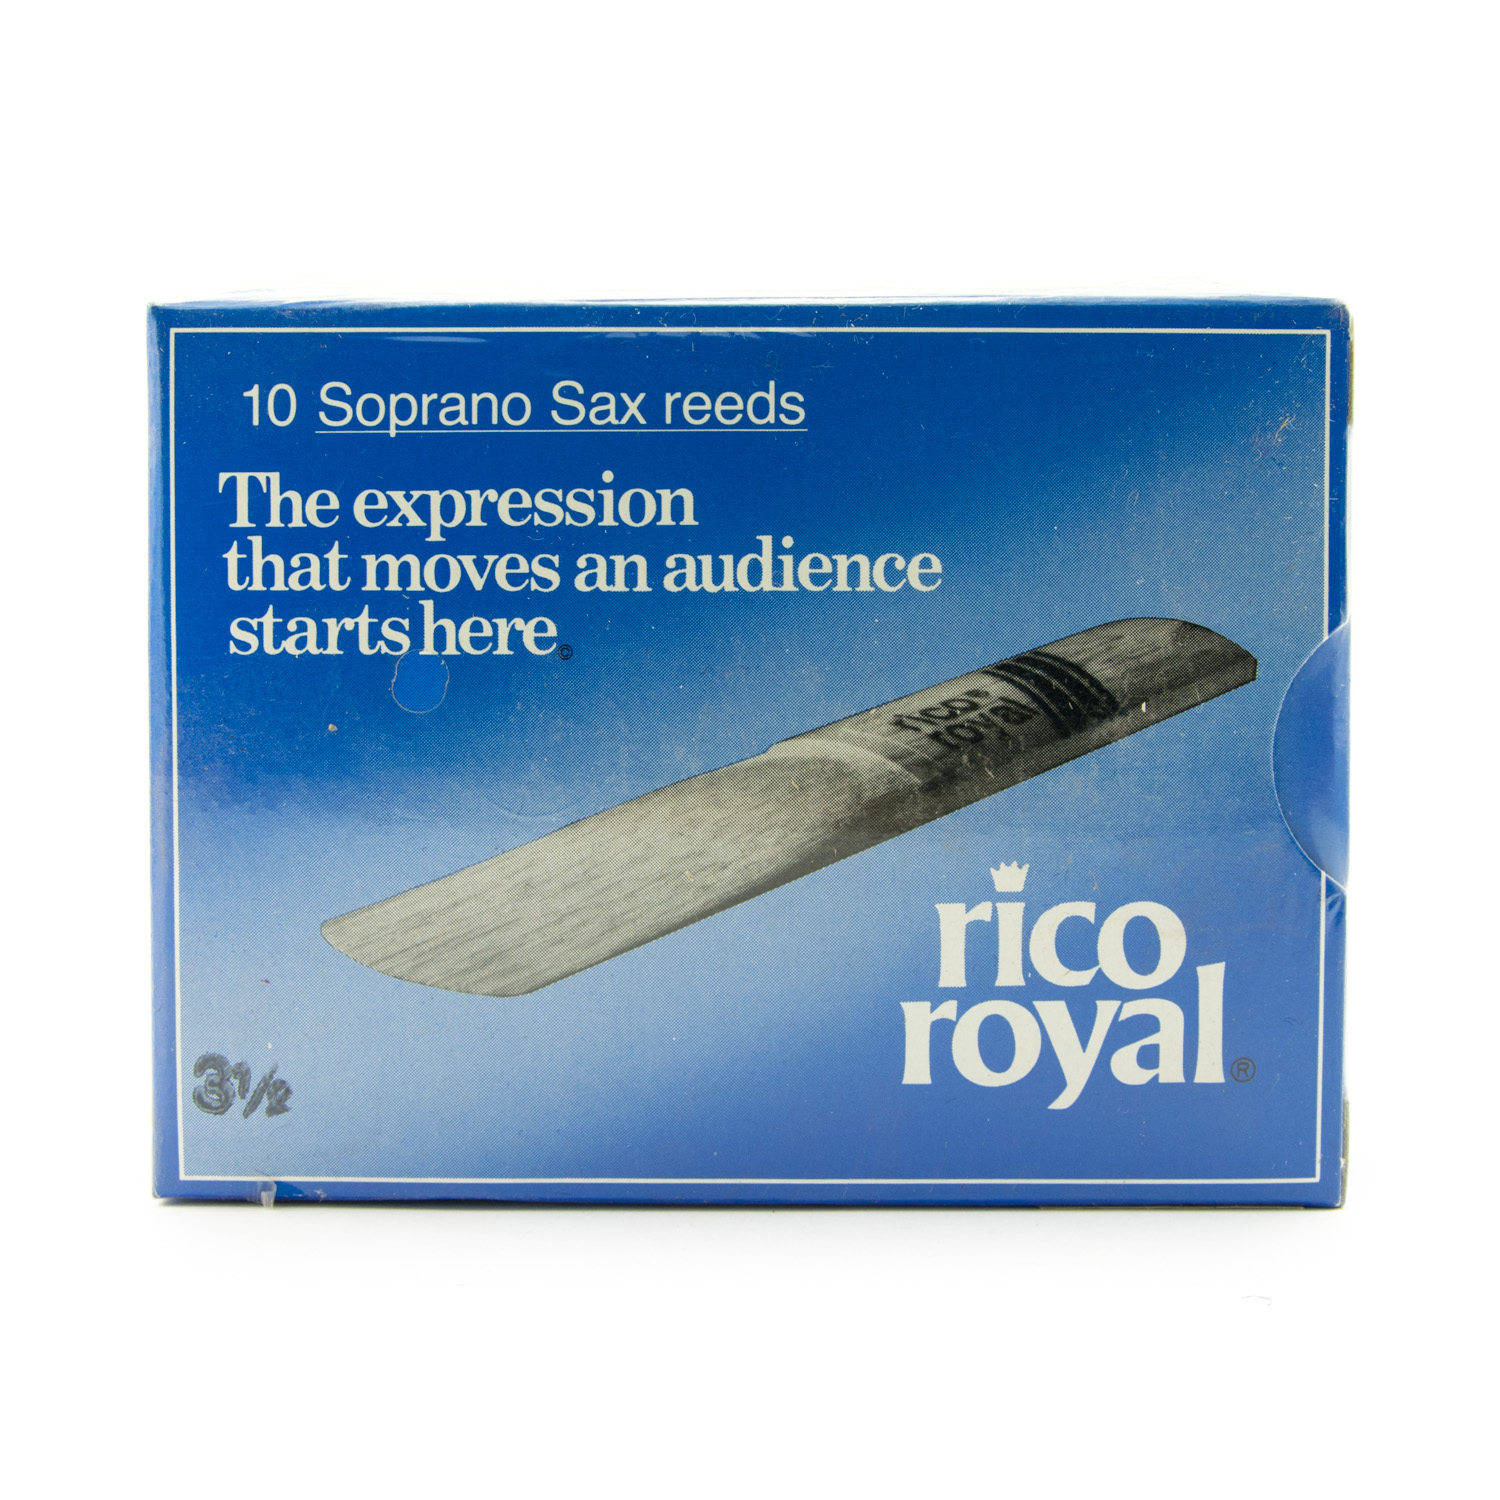 Rico Royal Reeds - Soprano Sax - Old Packaging